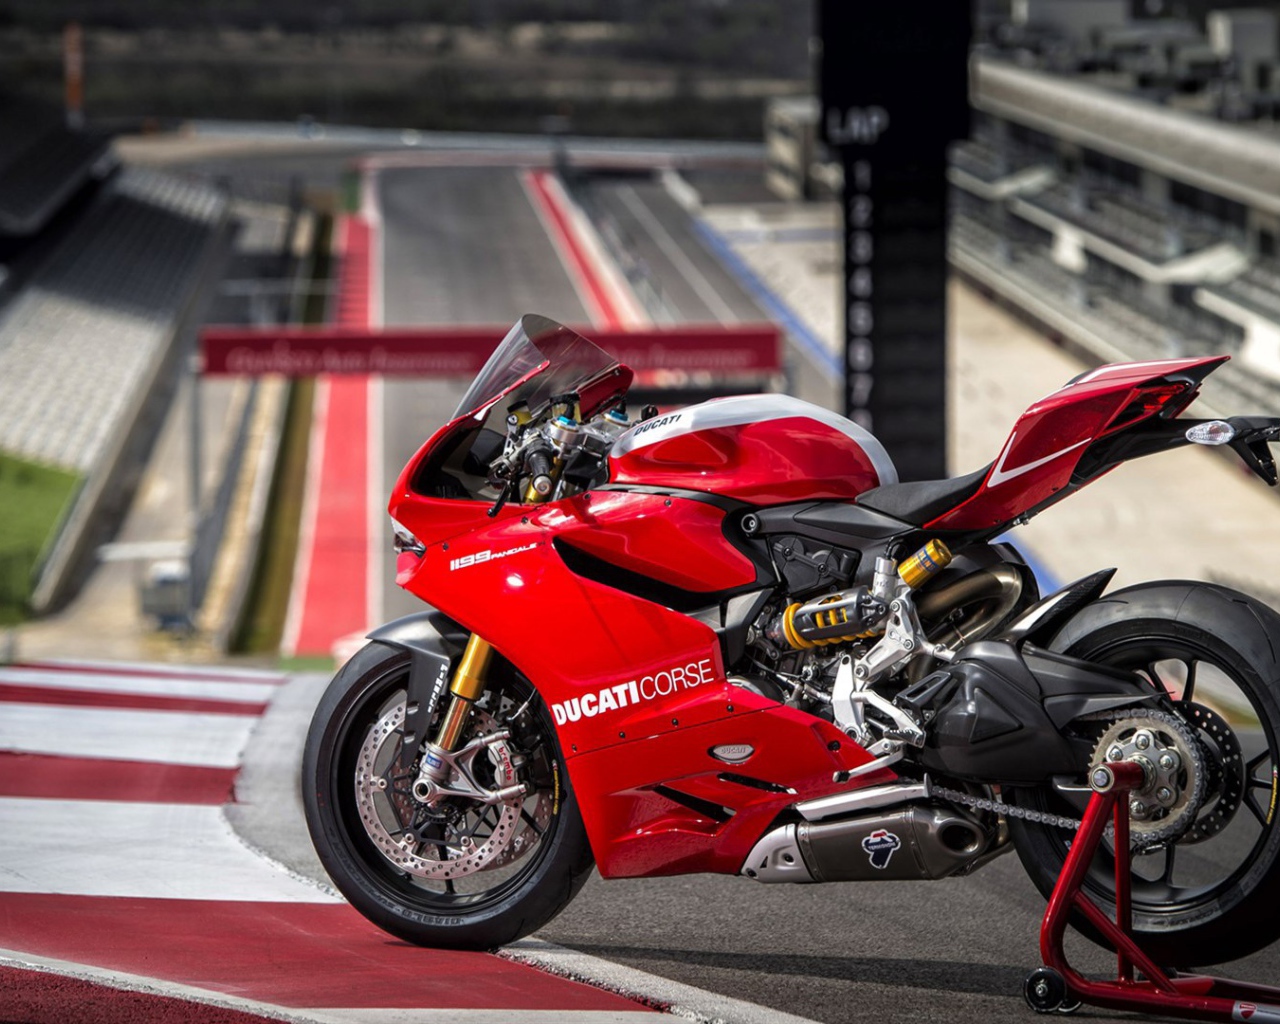 Мотоцикл Ducati Superbike 1199 Panigale